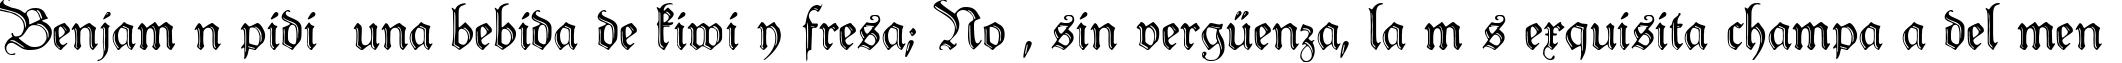 Пример написания шрифтом Peter Schlemihl текста на испанском